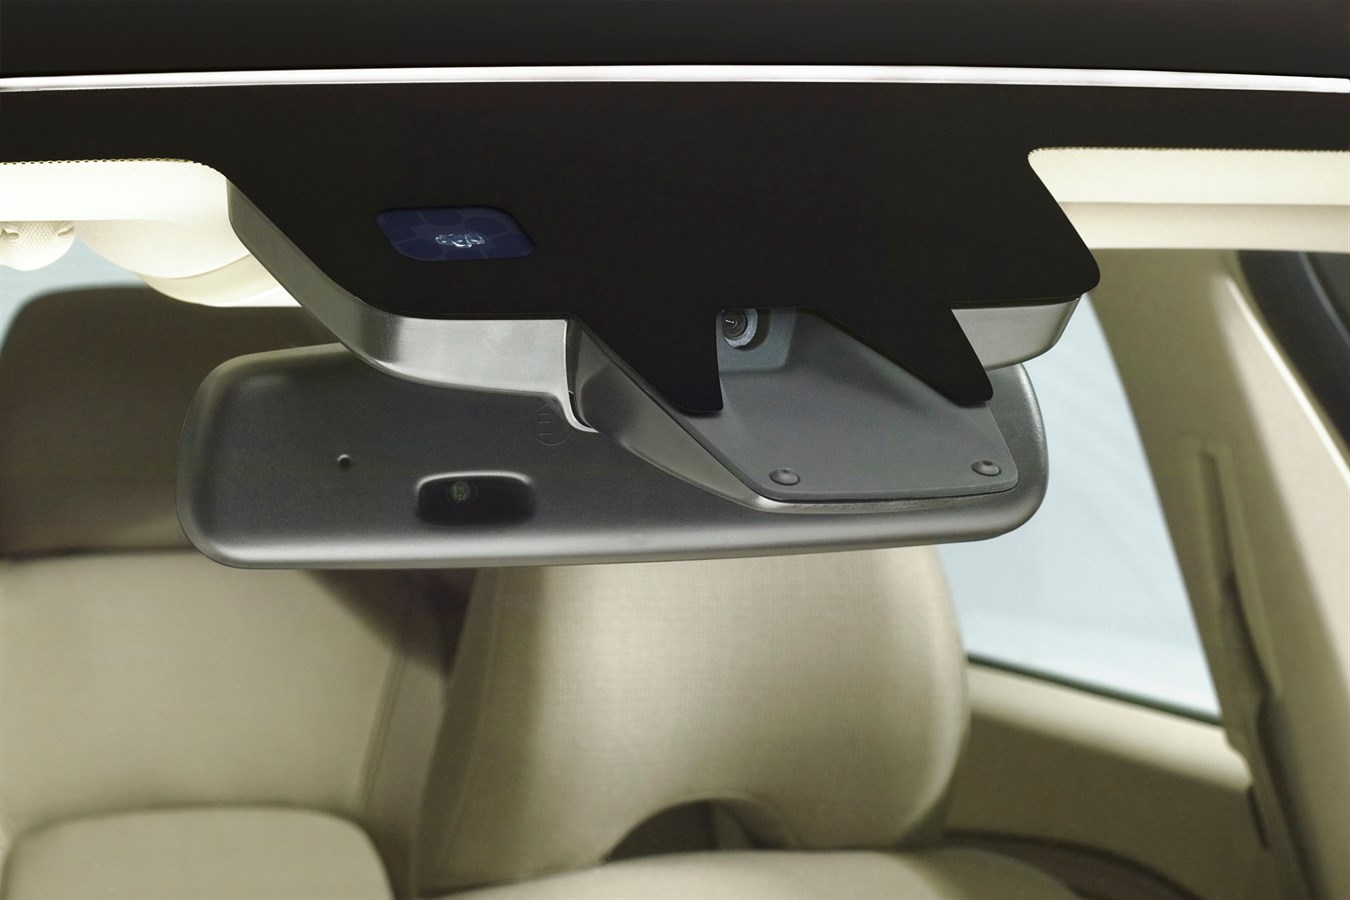 Camera behind interior rear-view mirror - Volvo Cars Global Media Newsroom